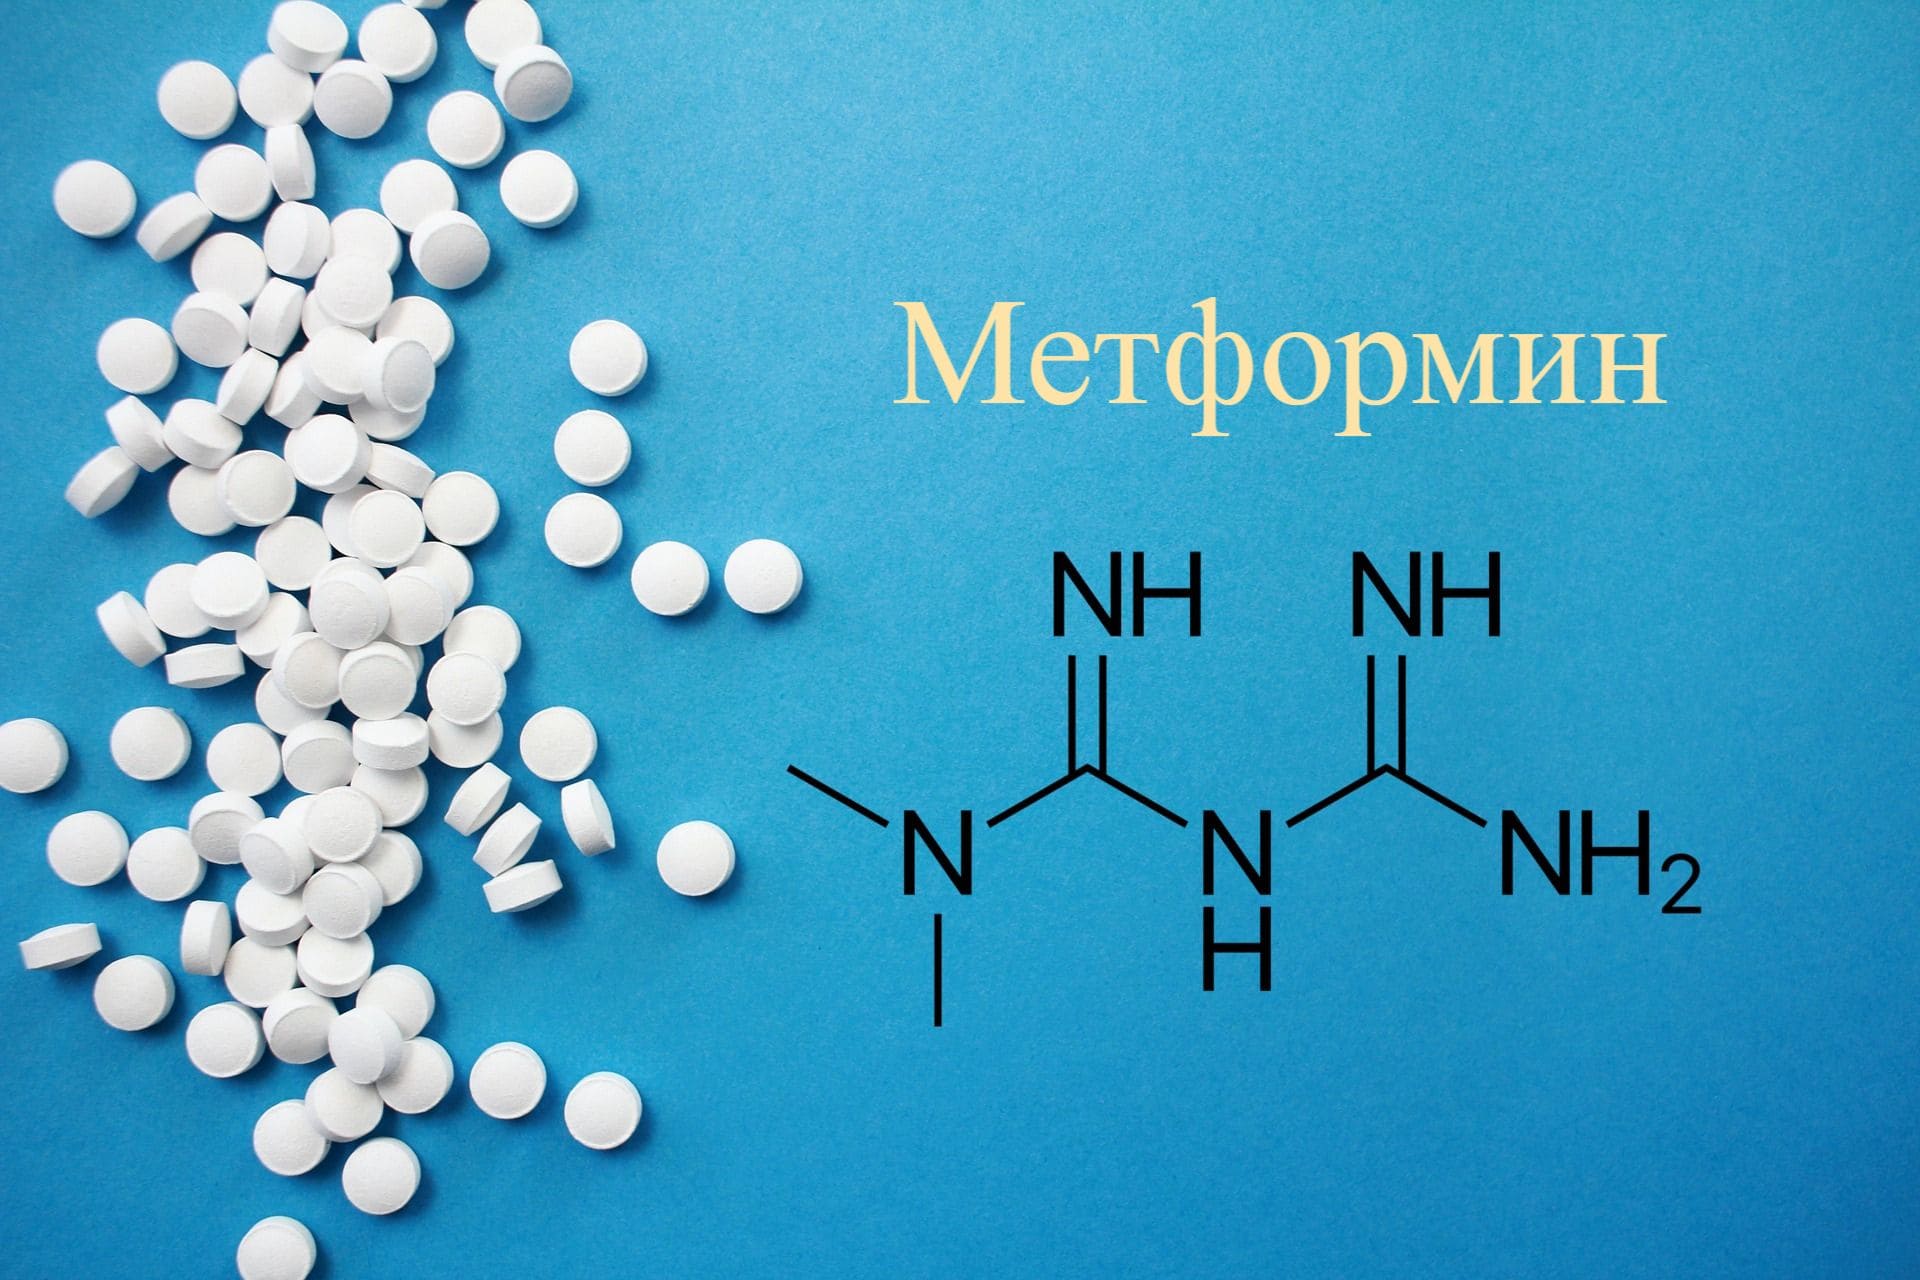 Метформин, таблетки, формула